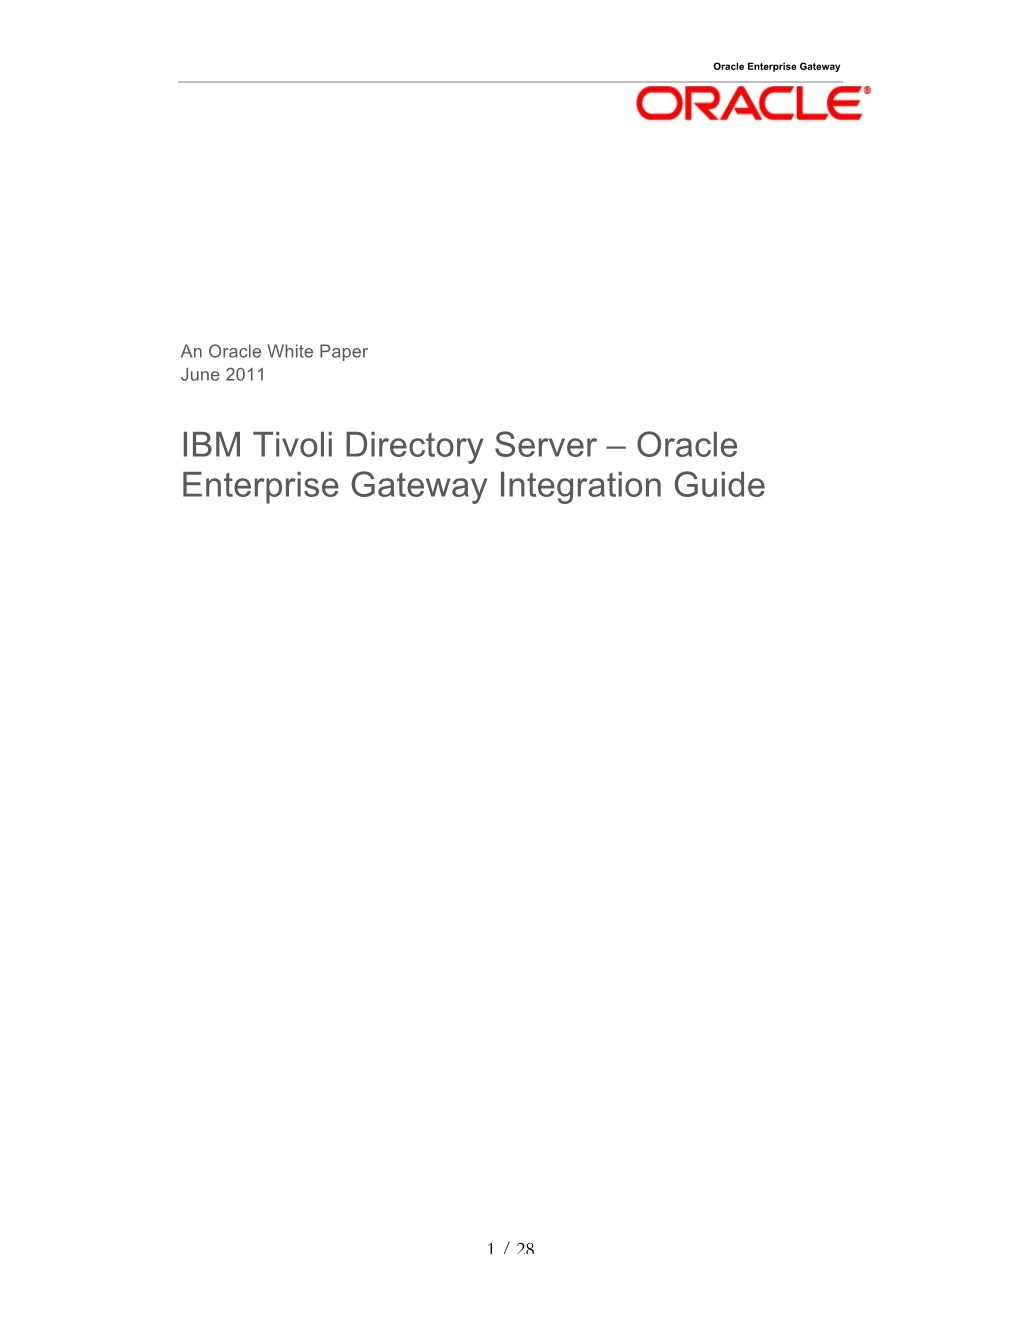 IBM Tivoli Directory Server – Oracle Enterprise Gateway Integration Guide